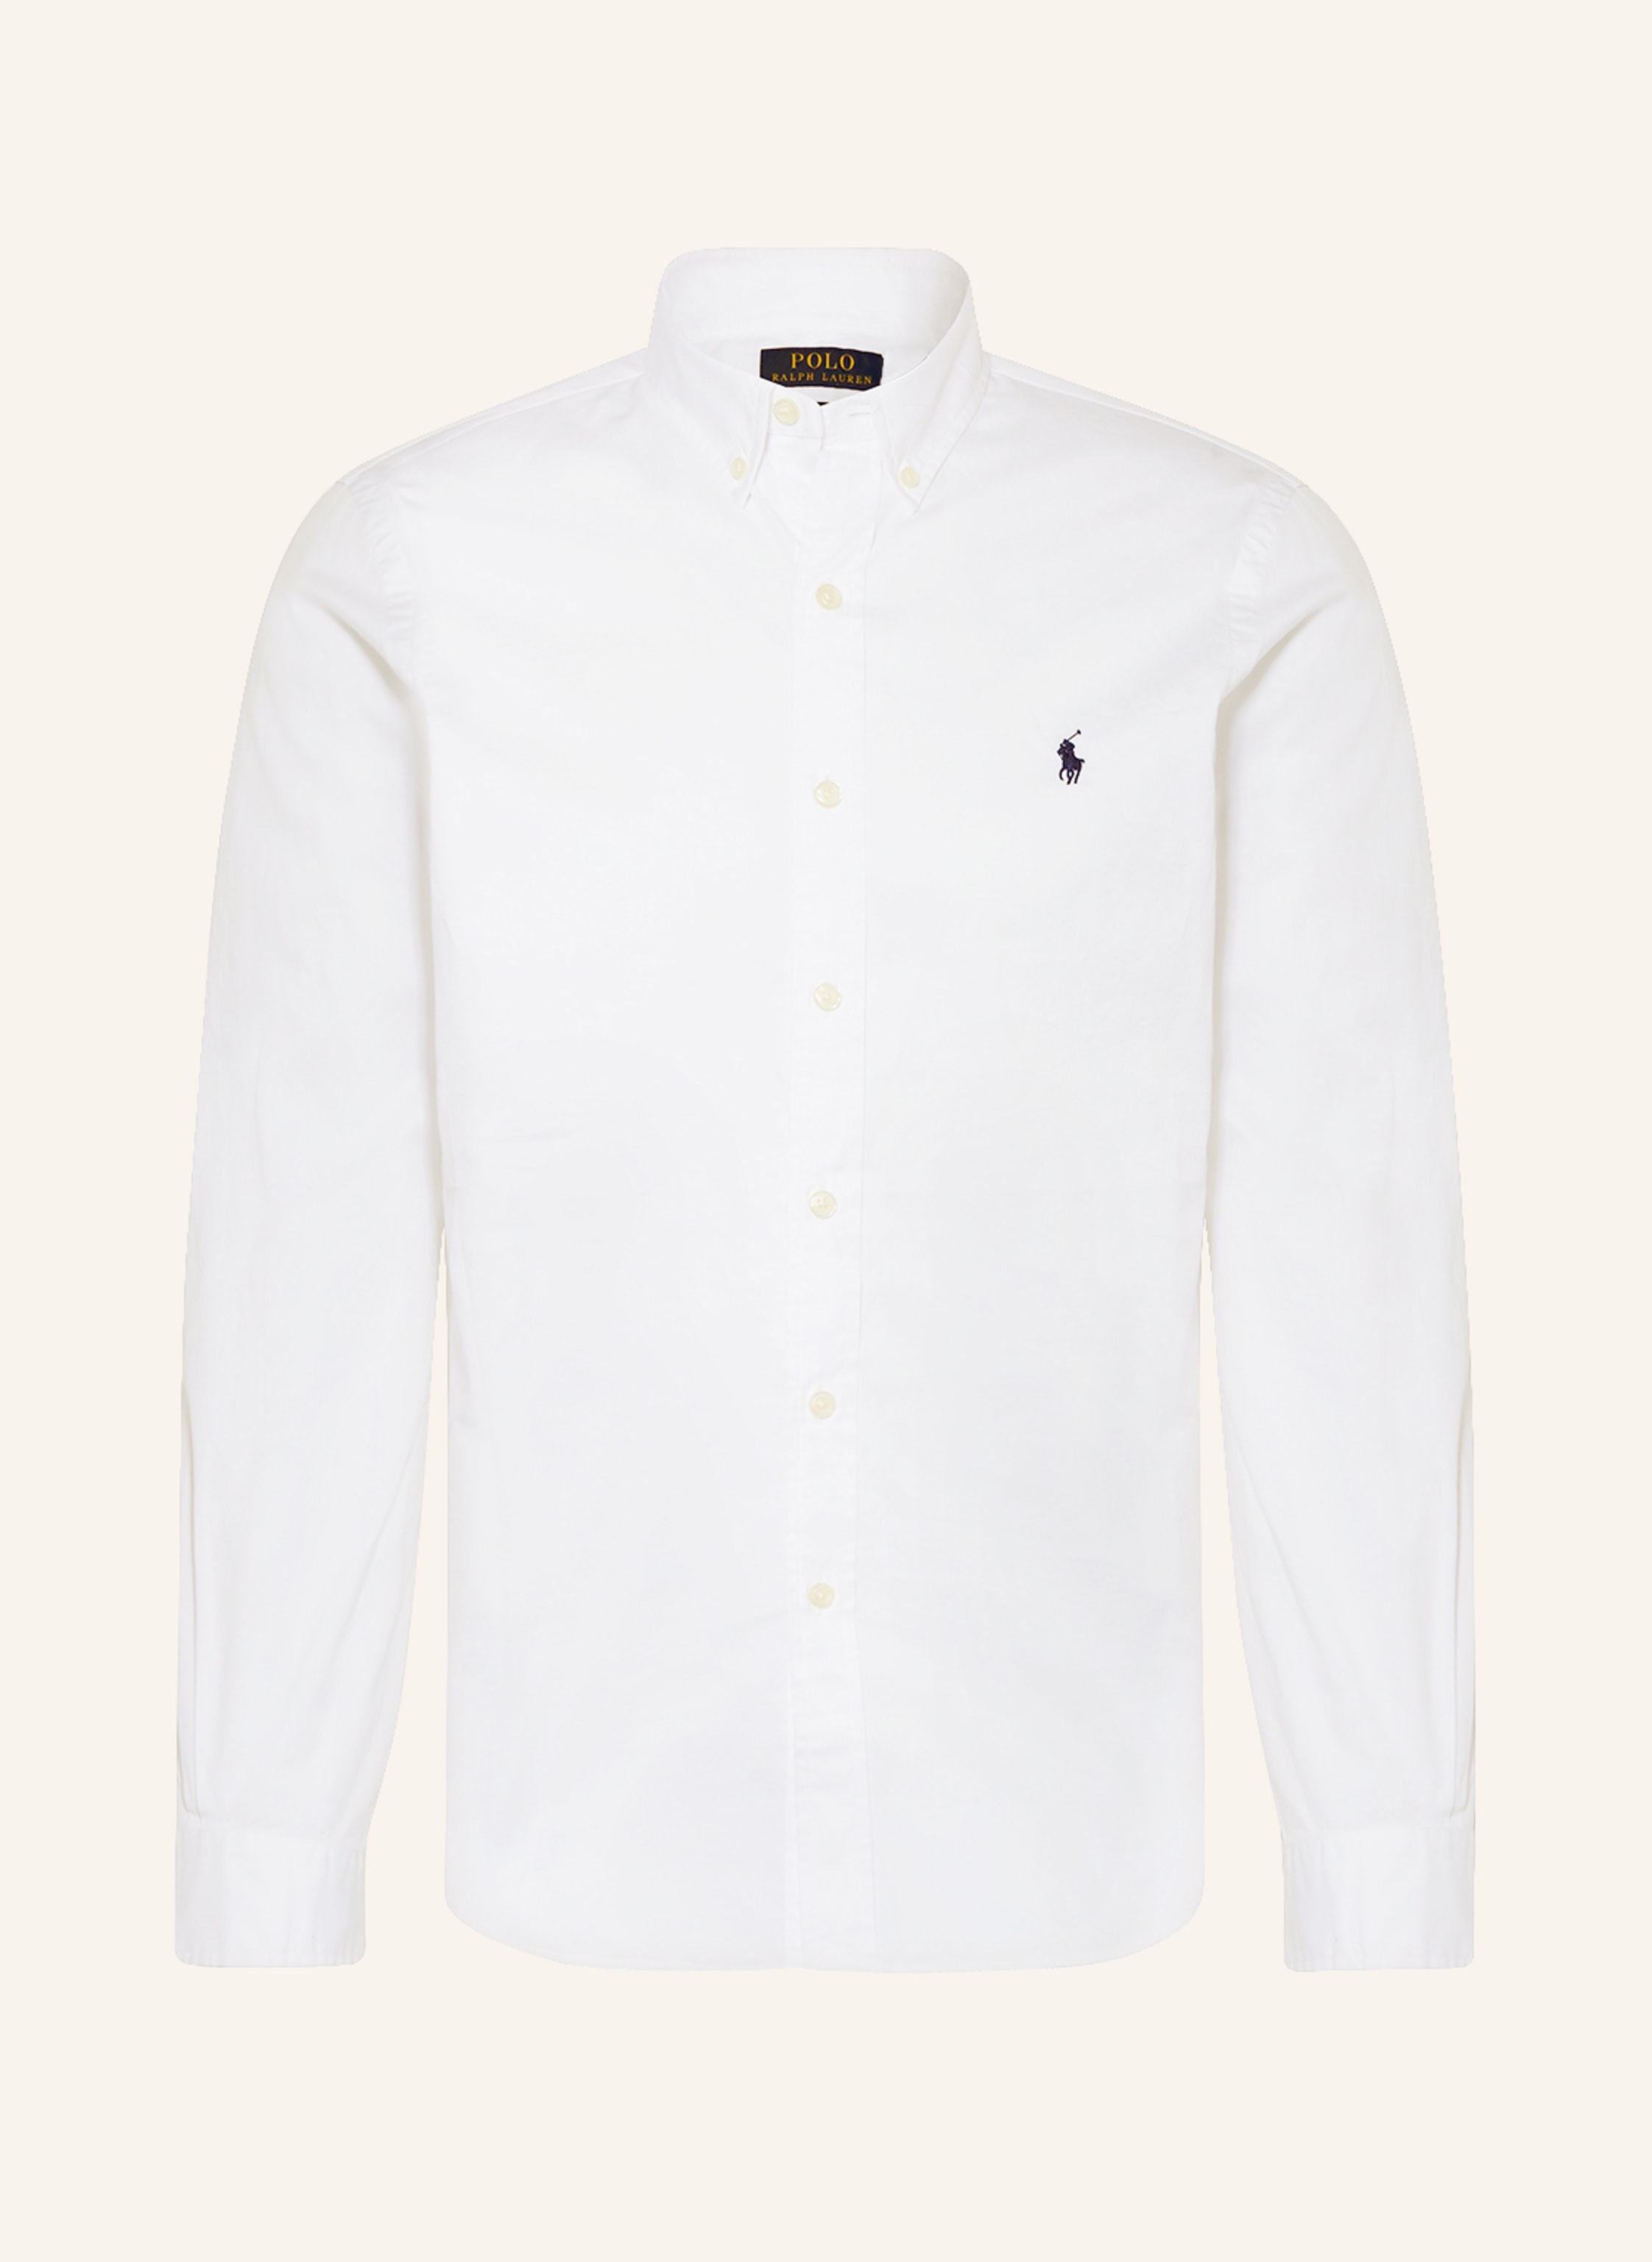 POLO RALPH LAUREN Shirt slim fit in white